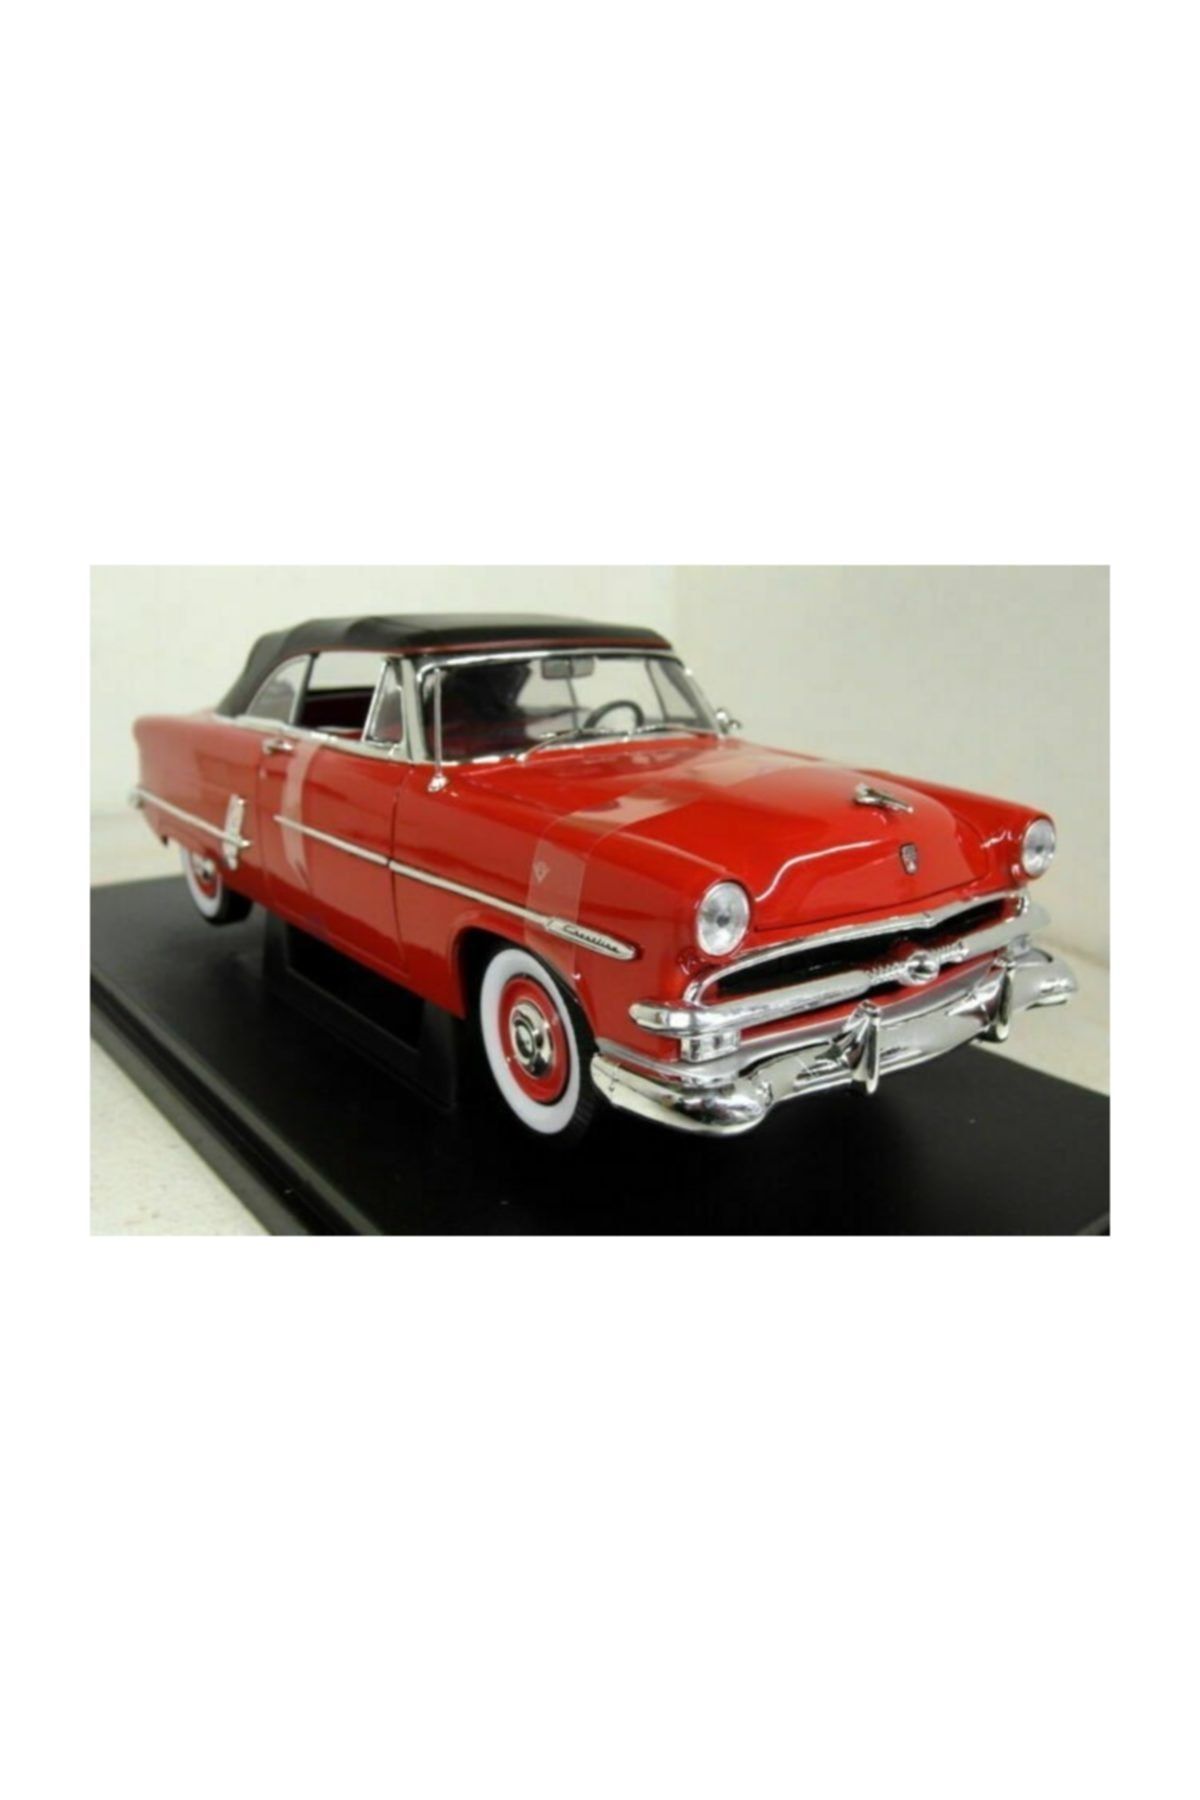 KARSAN Welly 1953 Ford Crestline Sunliner Kırmızı 1 18